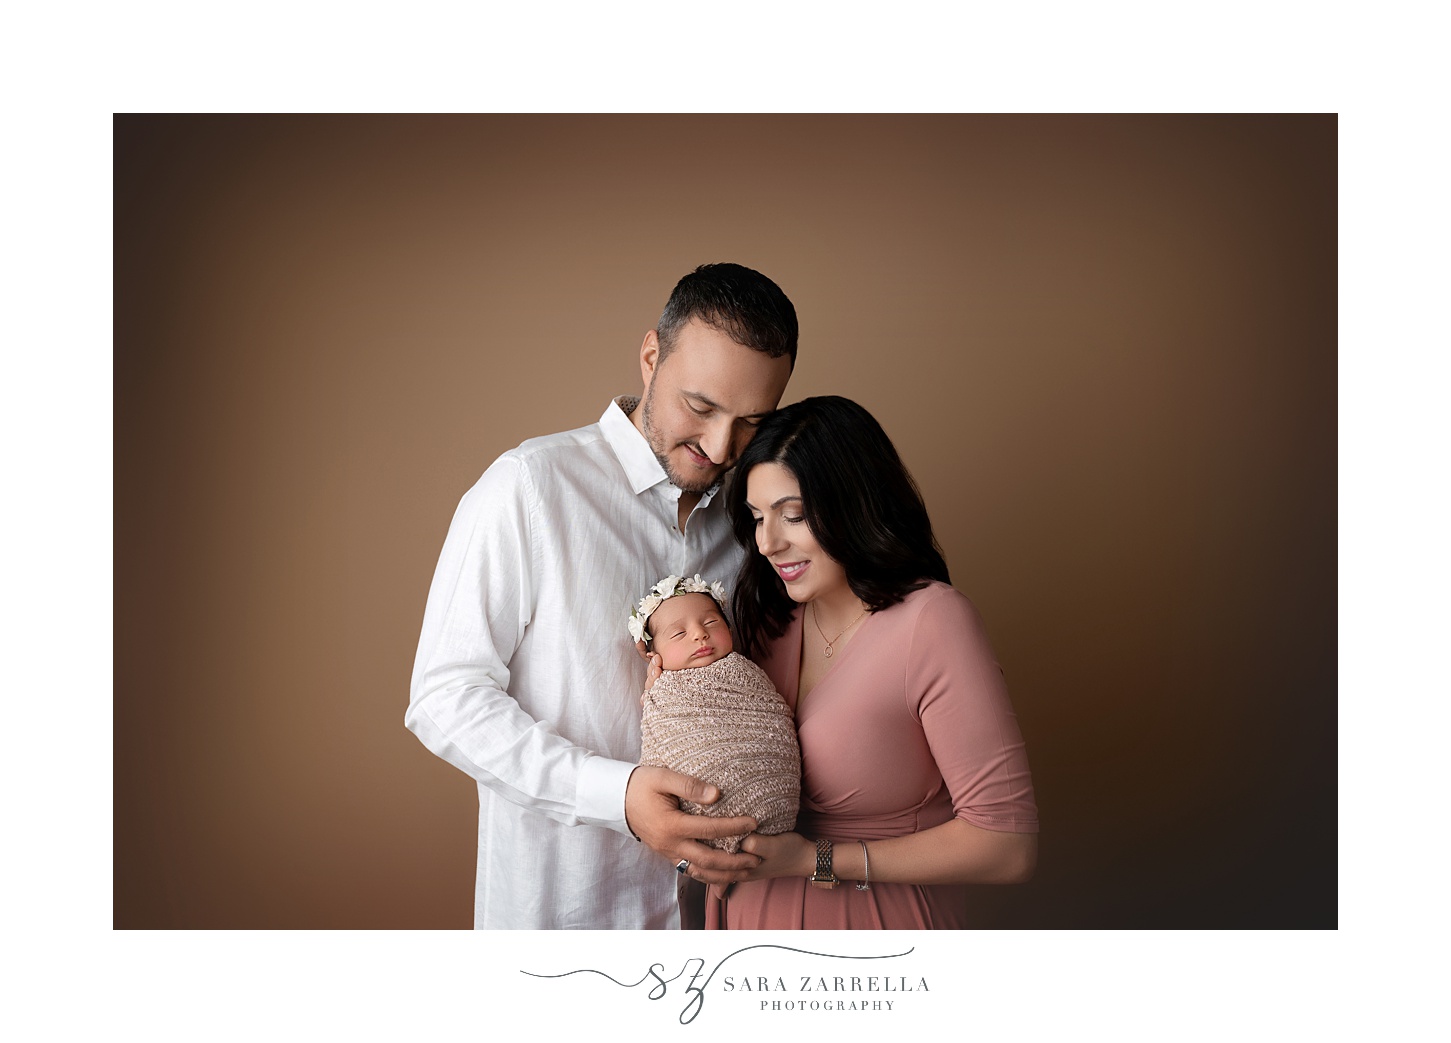 new parents hug baby girl during newborn portraits in RI studio